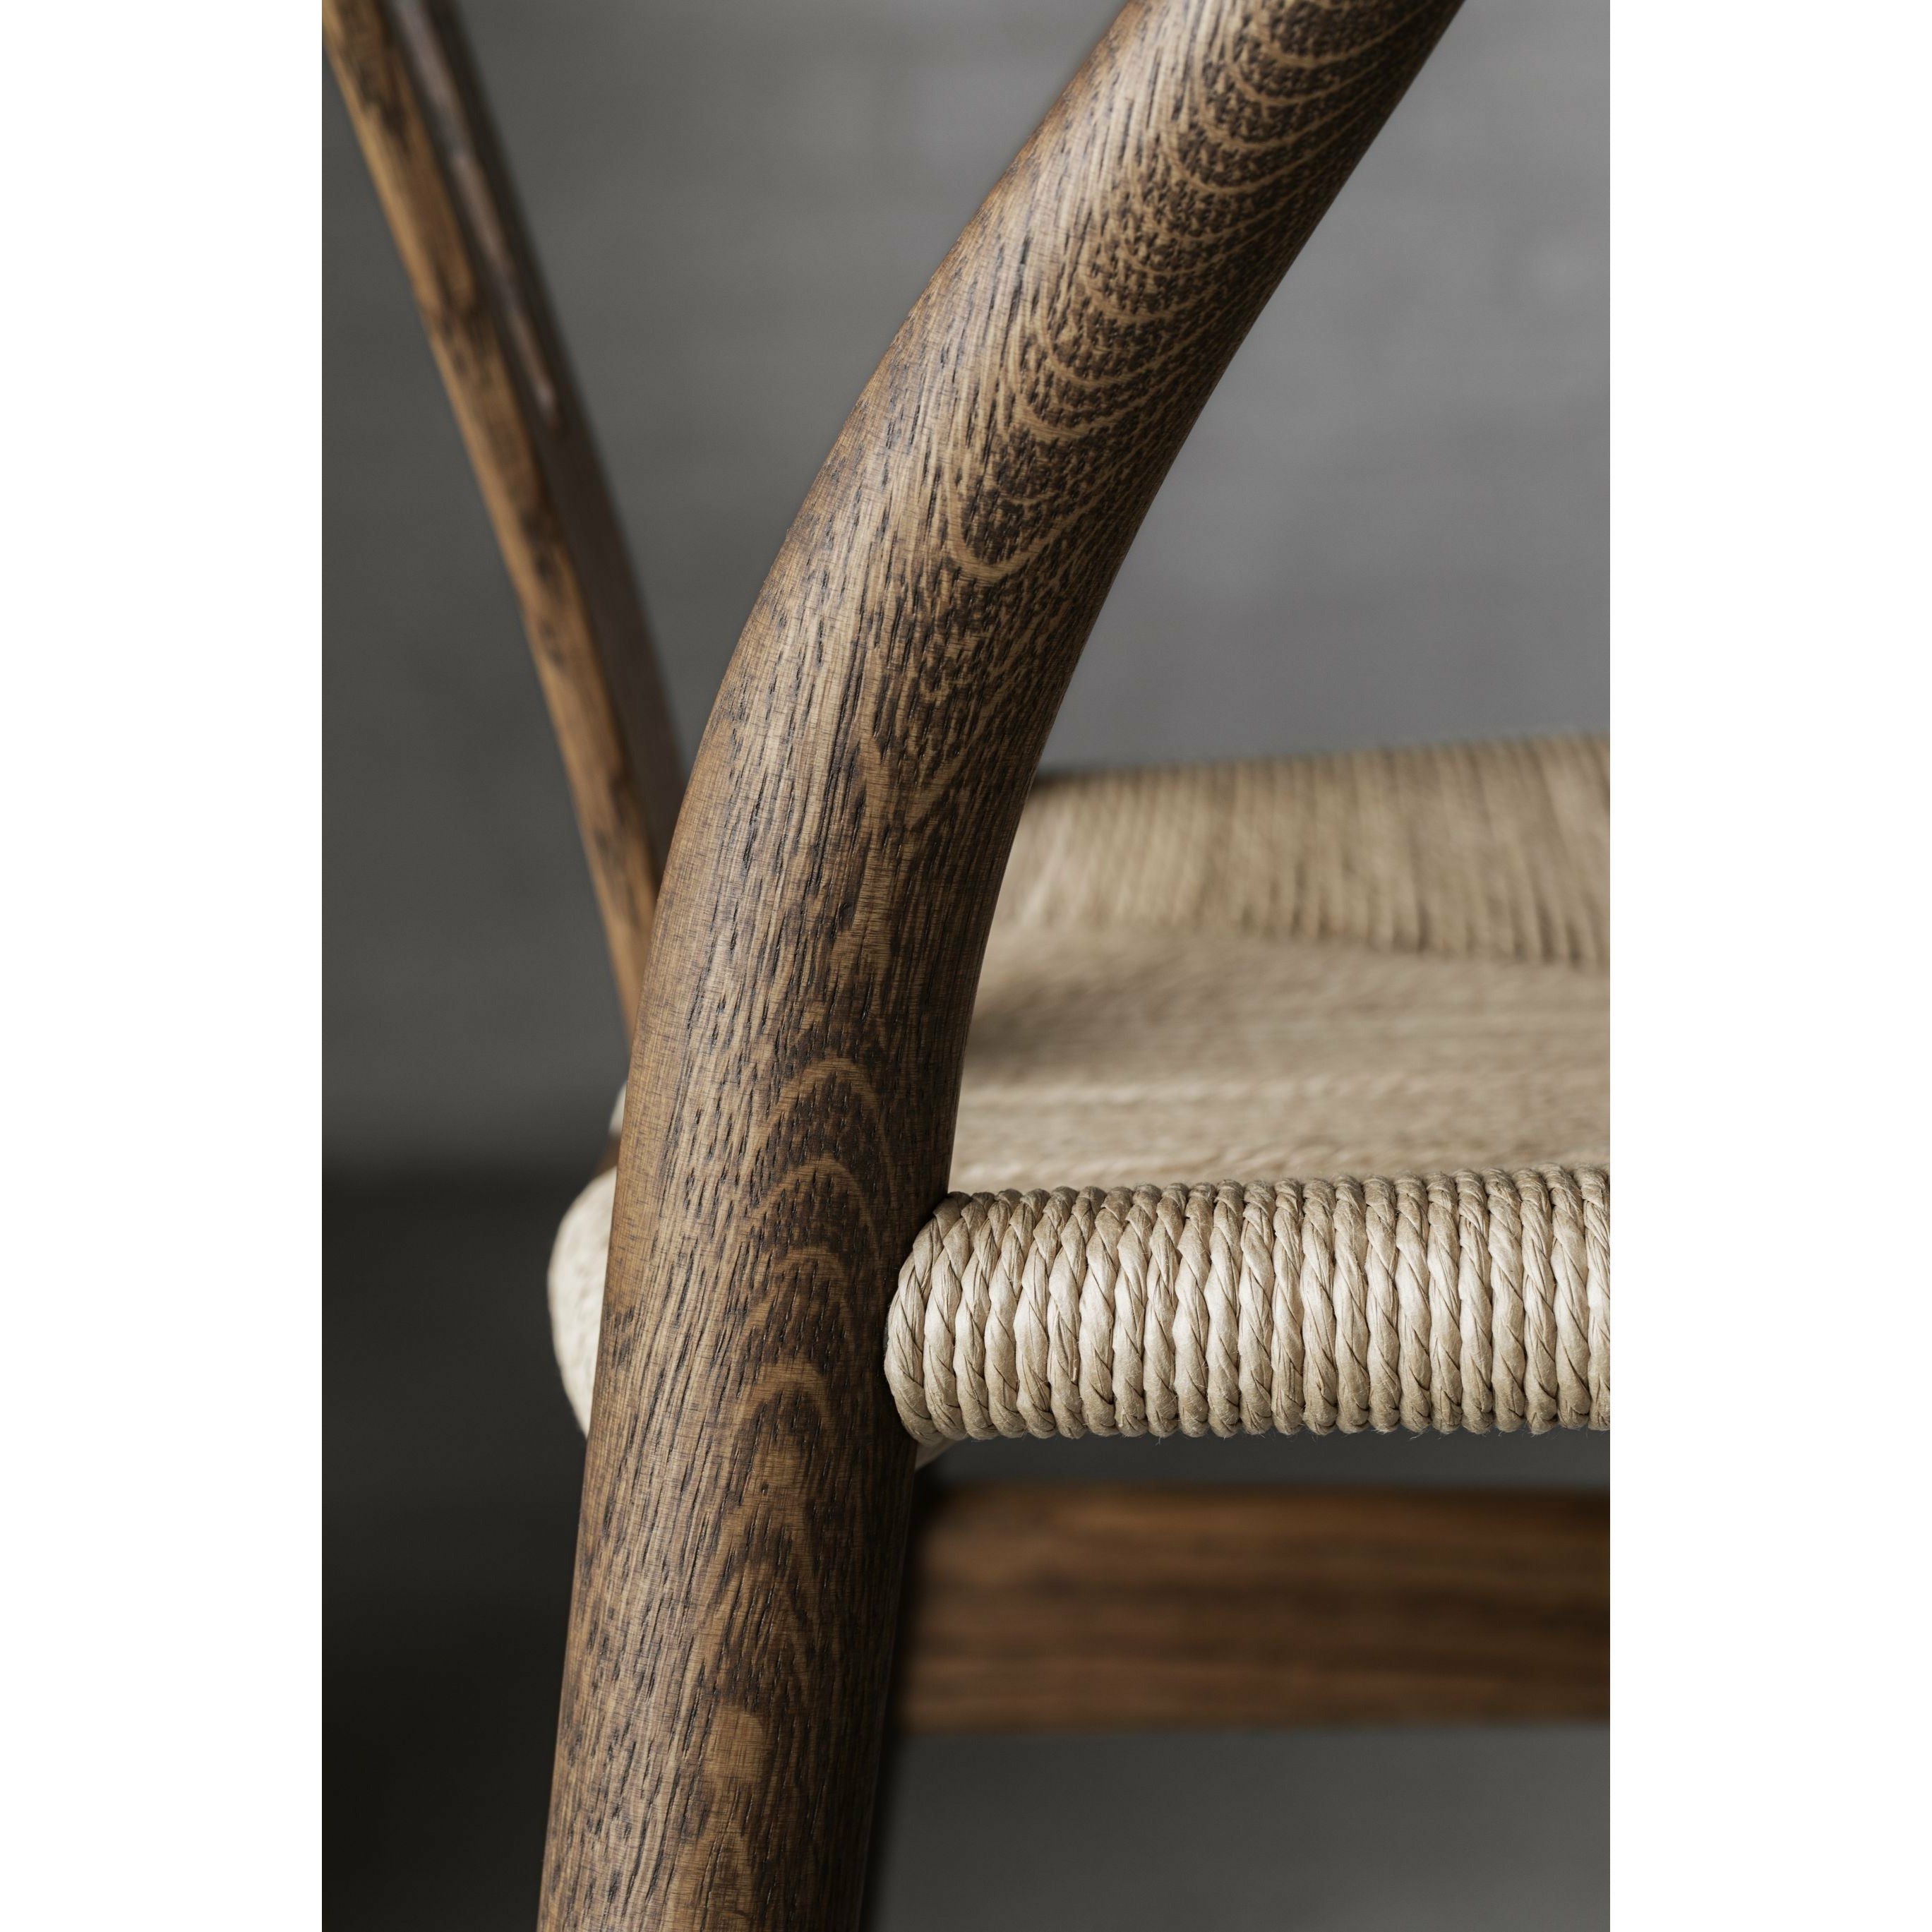 Carl Hansen Ch24 Wishbone Chair Oak Smoke Colored Oil, Natural Cord